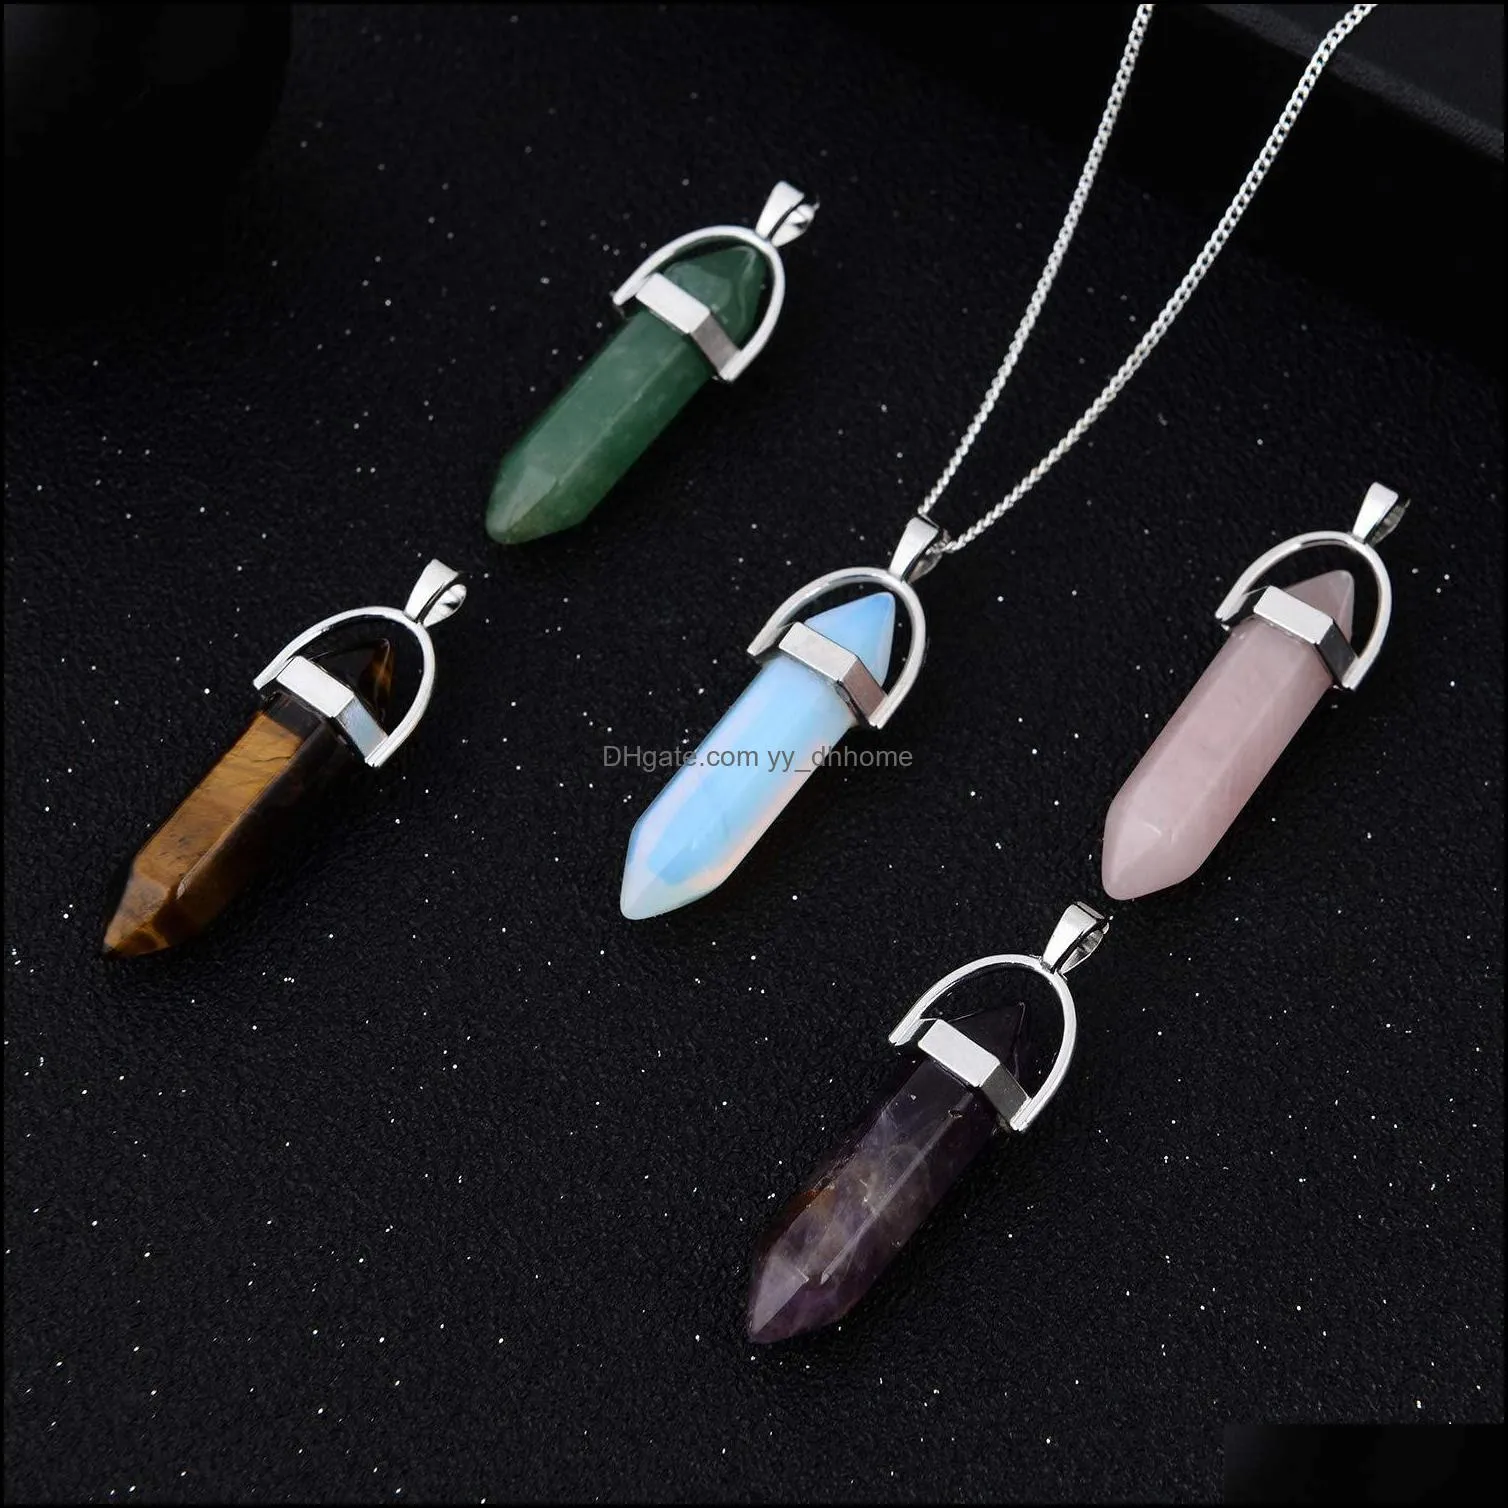 hexagonal prism bullet pendant necklace natural stone opal turquoises quartz healing reiki pendulum necklace for women jewelry